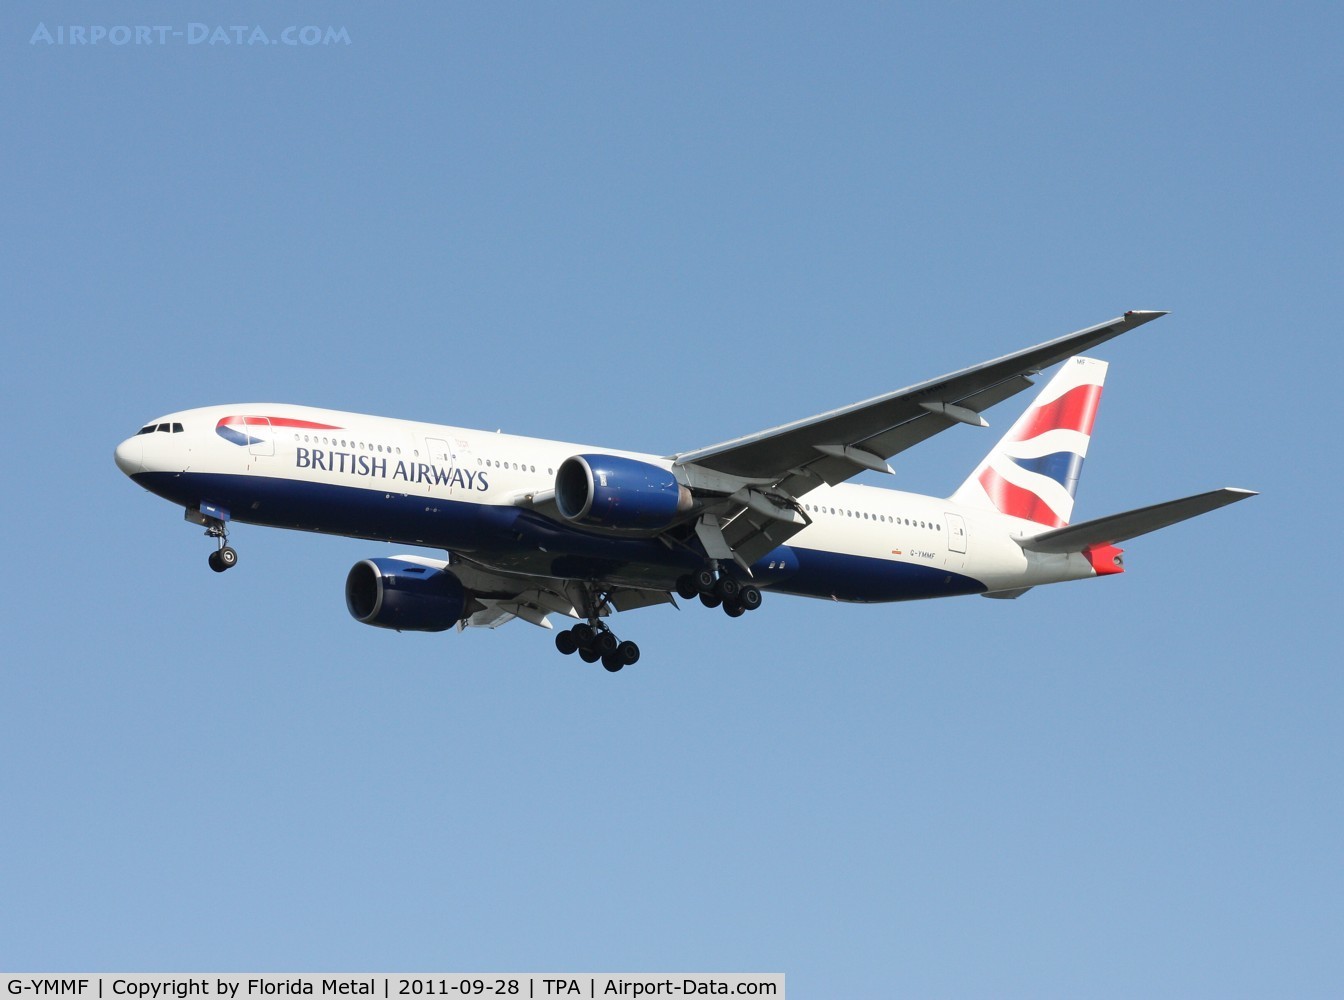 G-YMMF, 2000 Boeing 777-236 C/N 30307, British 777